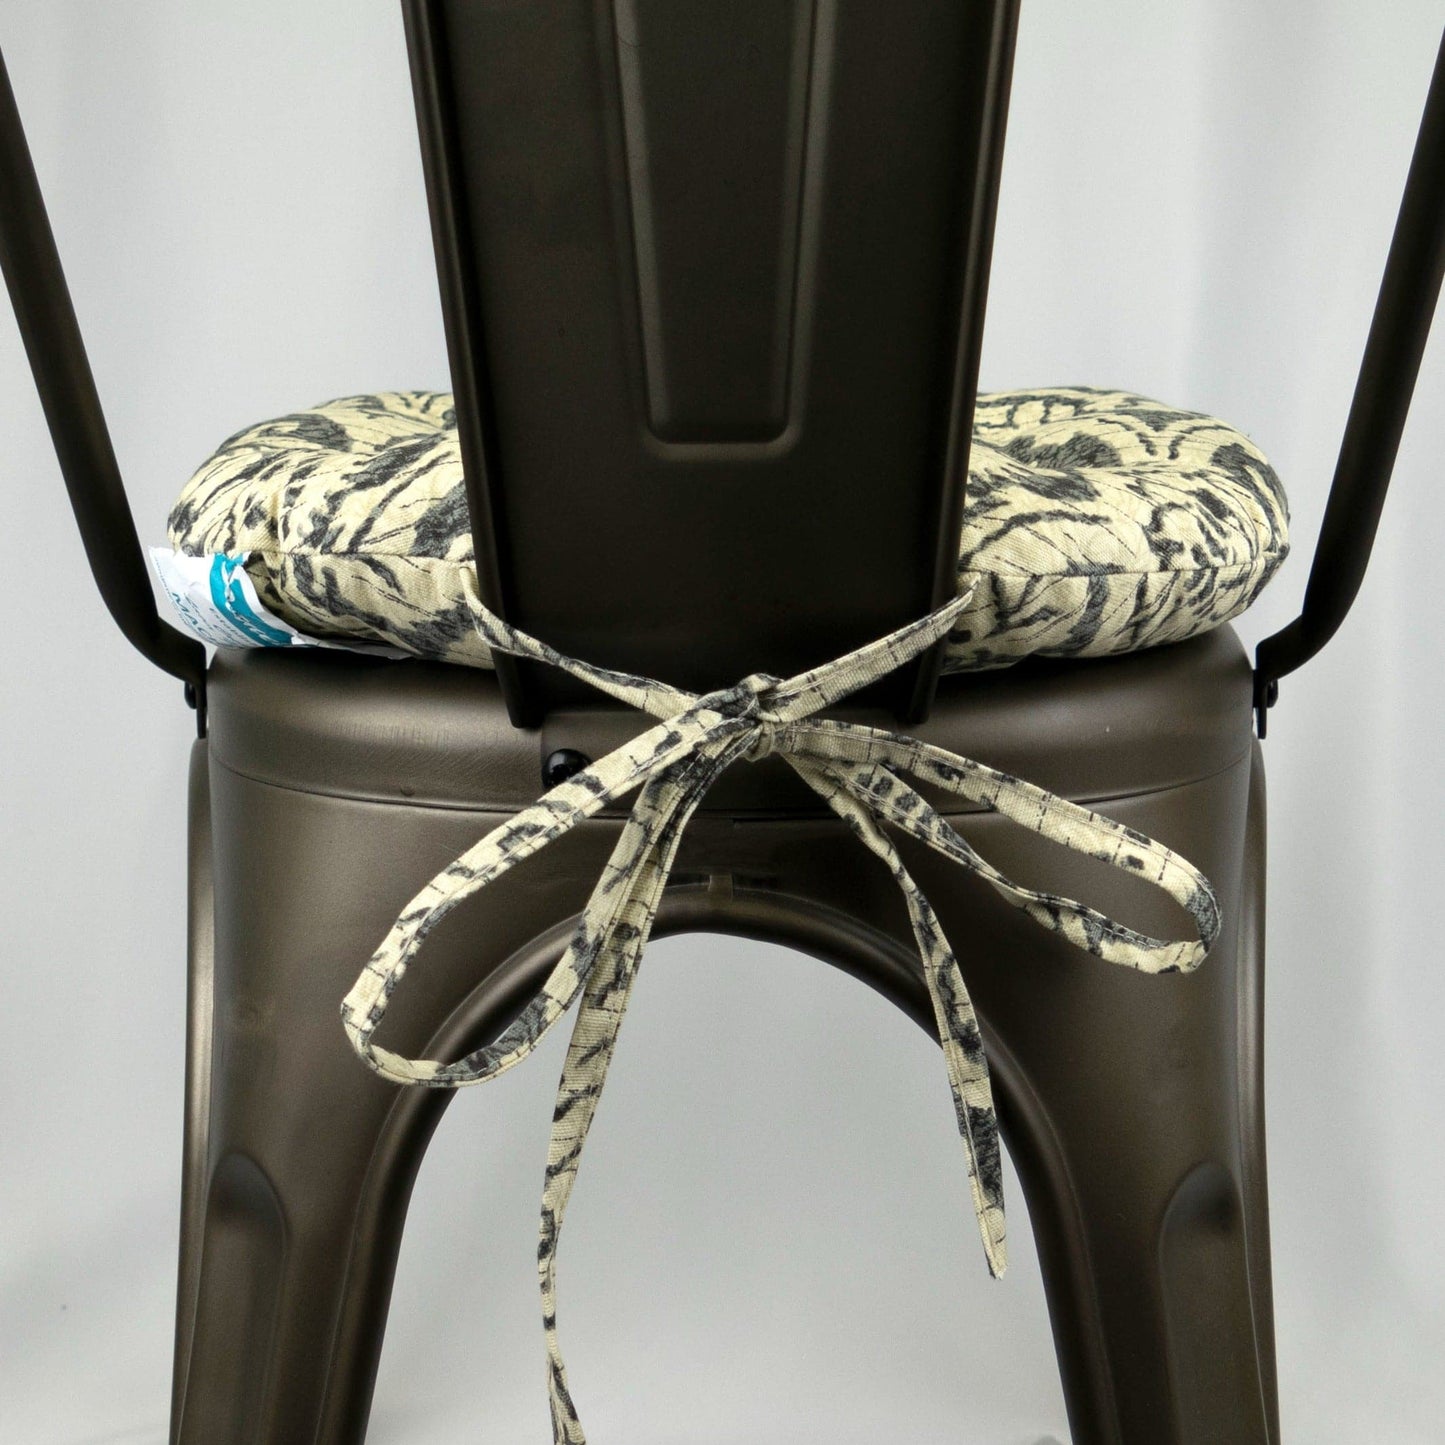 Flanders Industrial Chair Cushion - Latex Foam Fill - Barnett Home Decor - Black & Tan